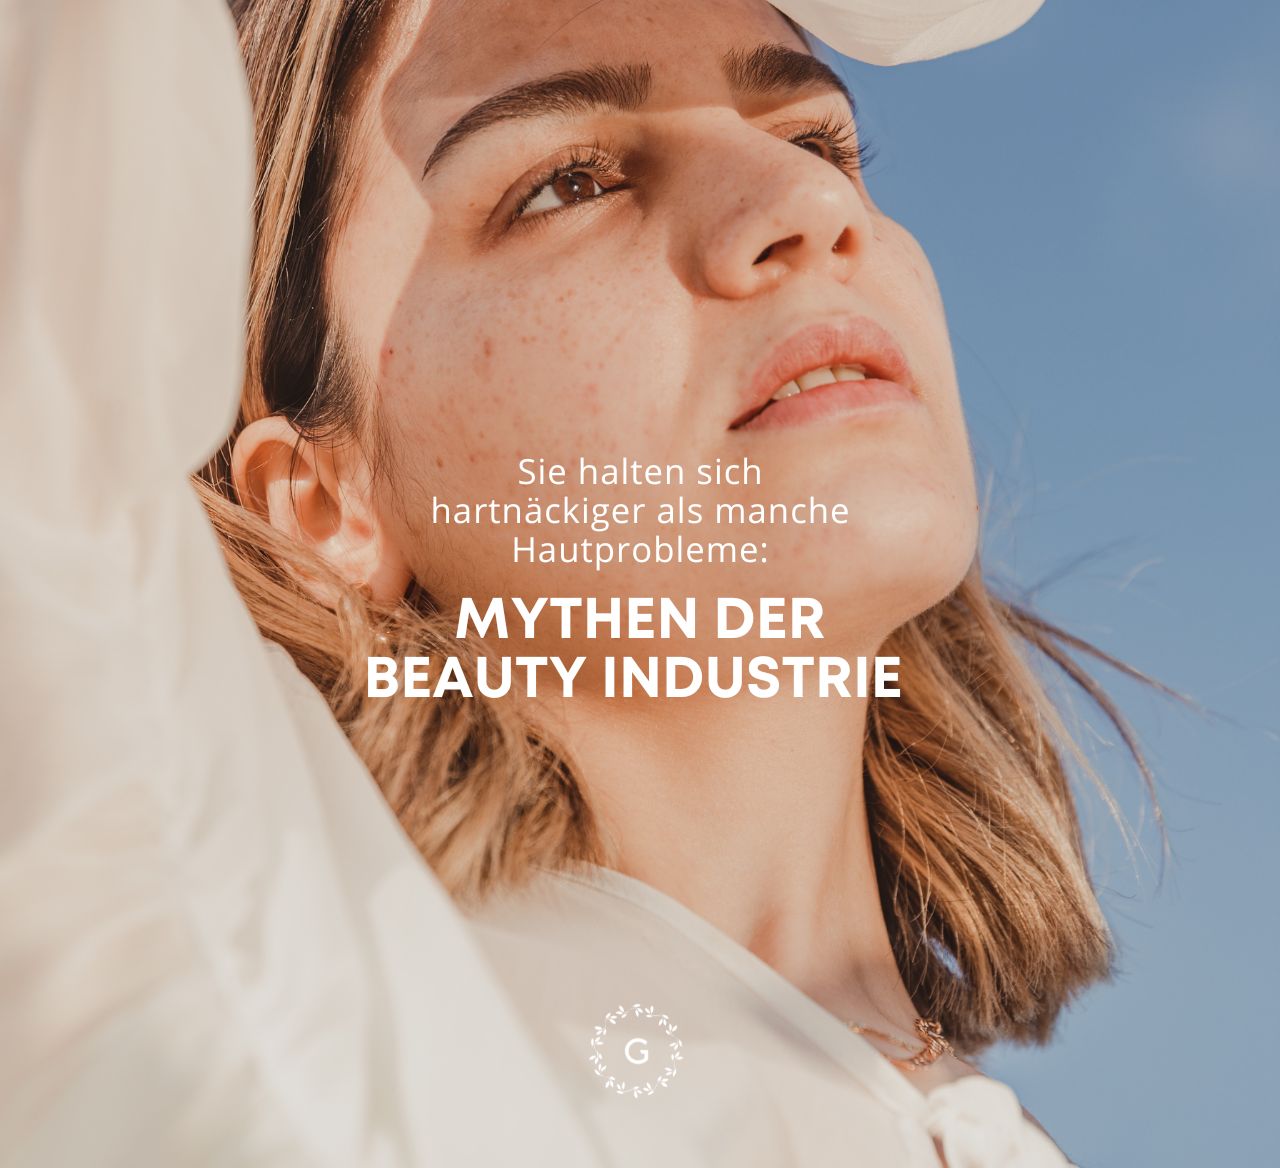 9 Mythen der Beauty Industrie